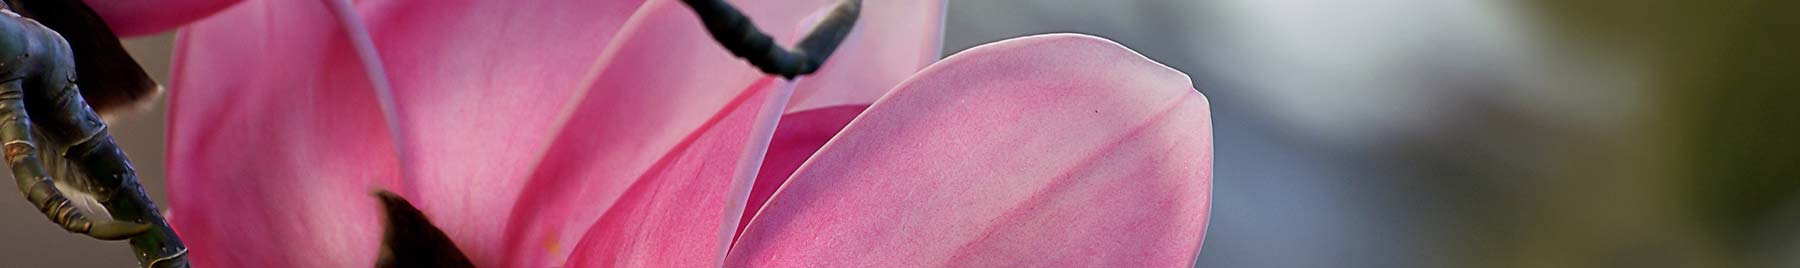 pink magnolia flower in soft light